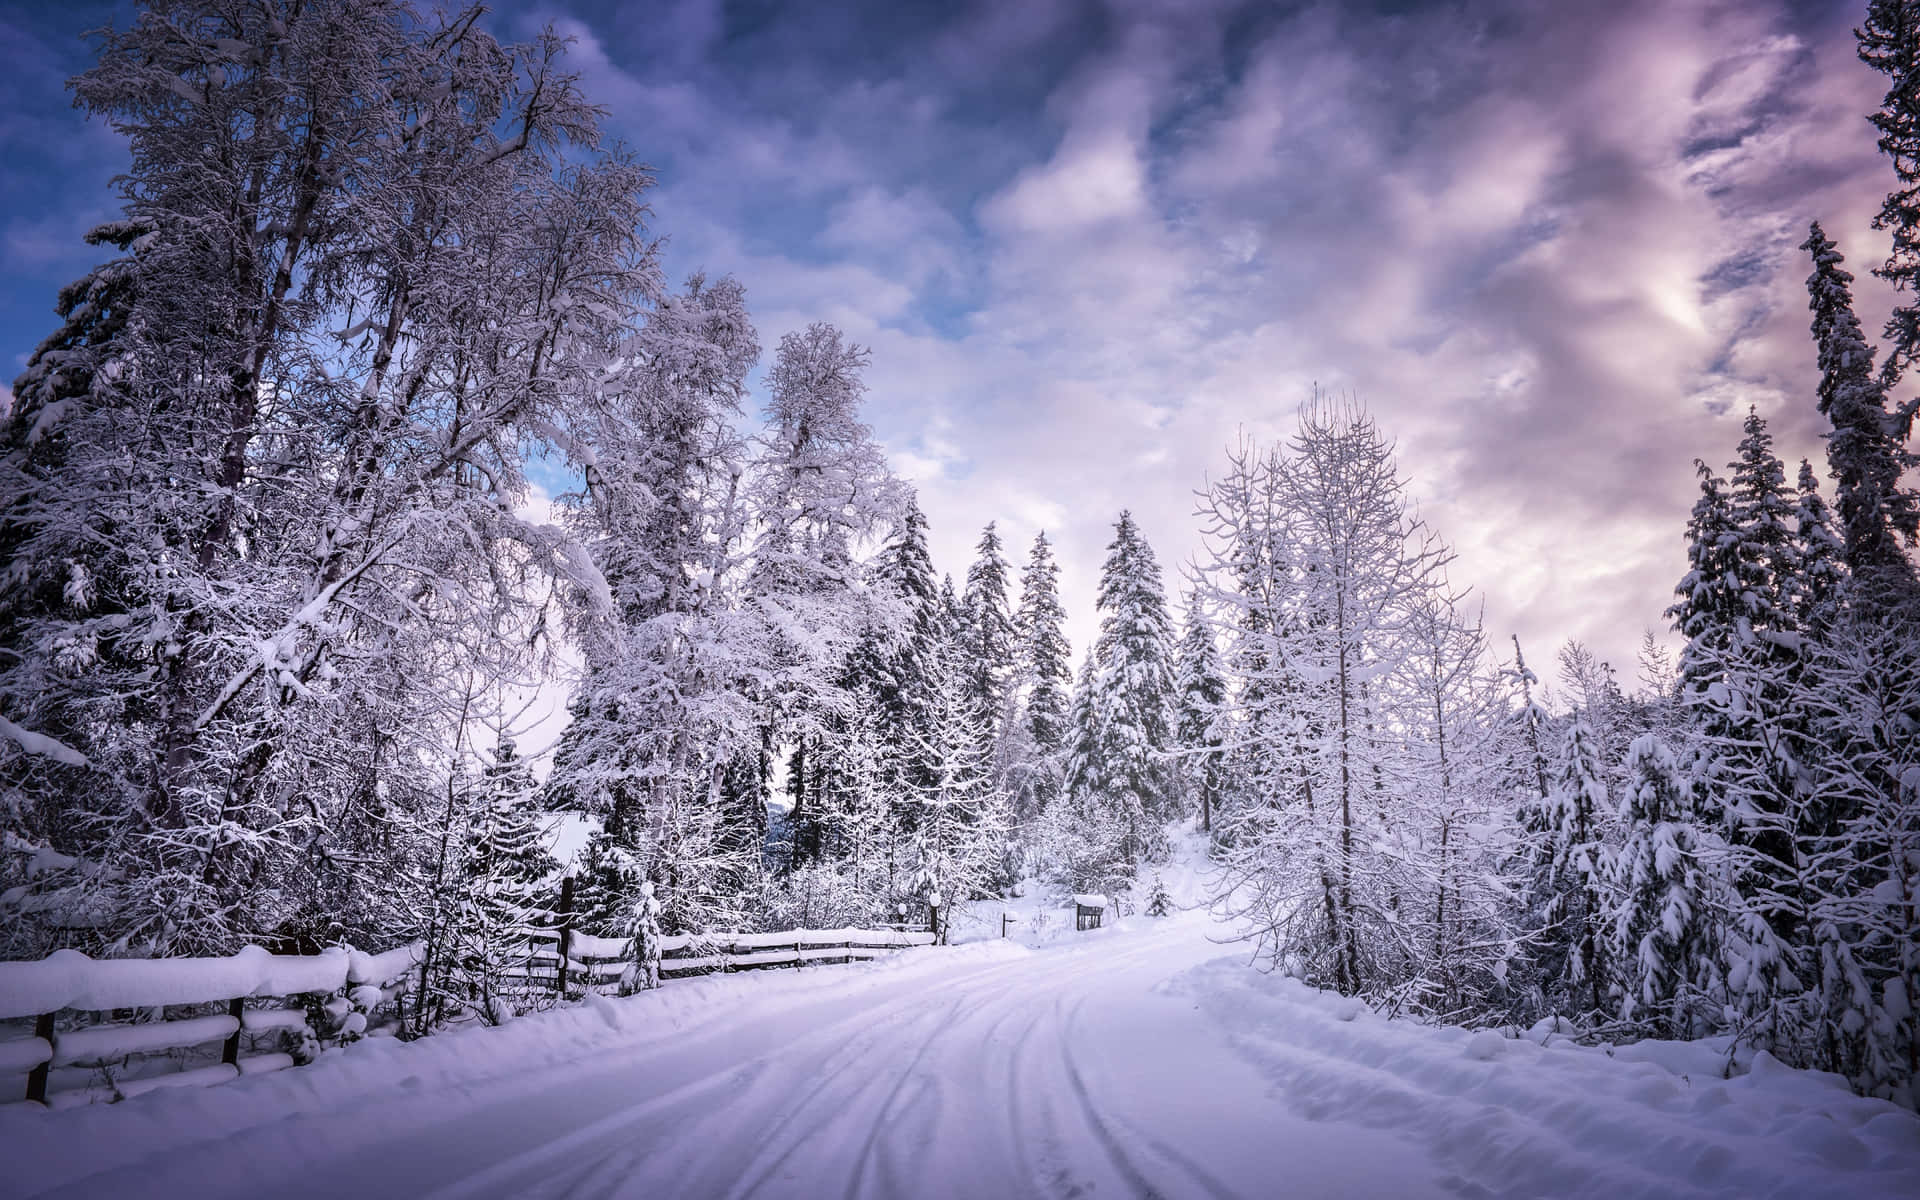 Snow-laden trees surrounding a winter road Wallpaper